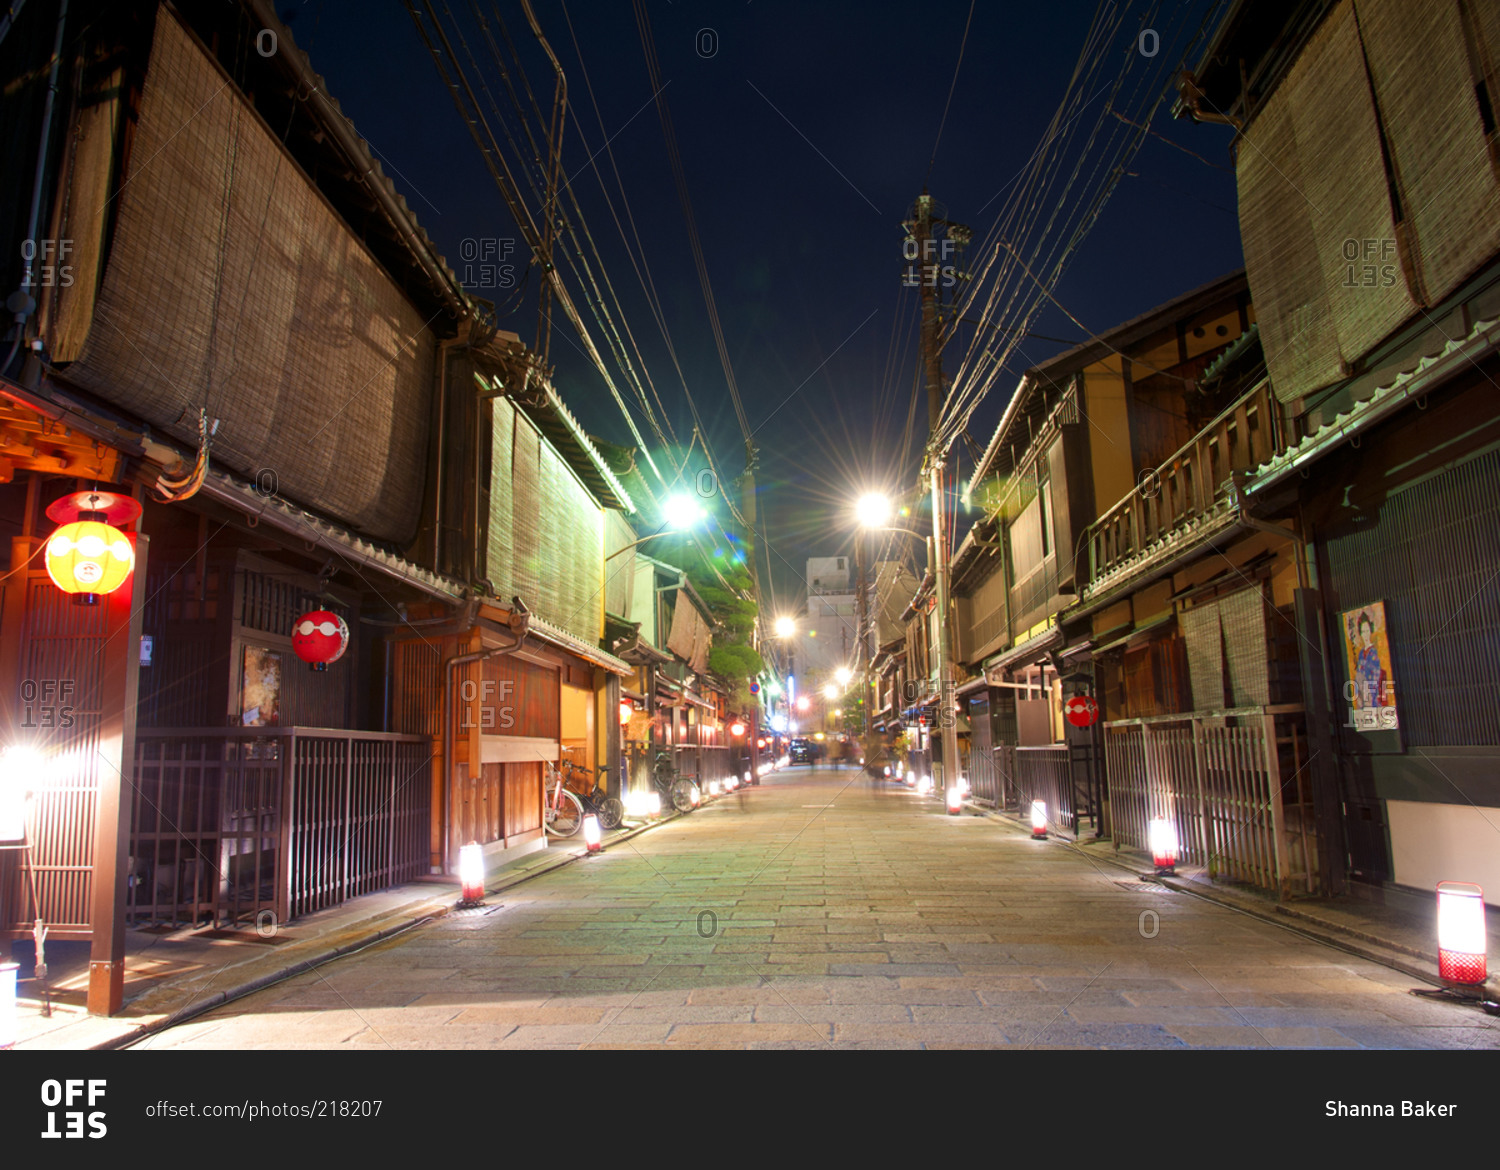 Brightly lit street scene at night in Kyoto